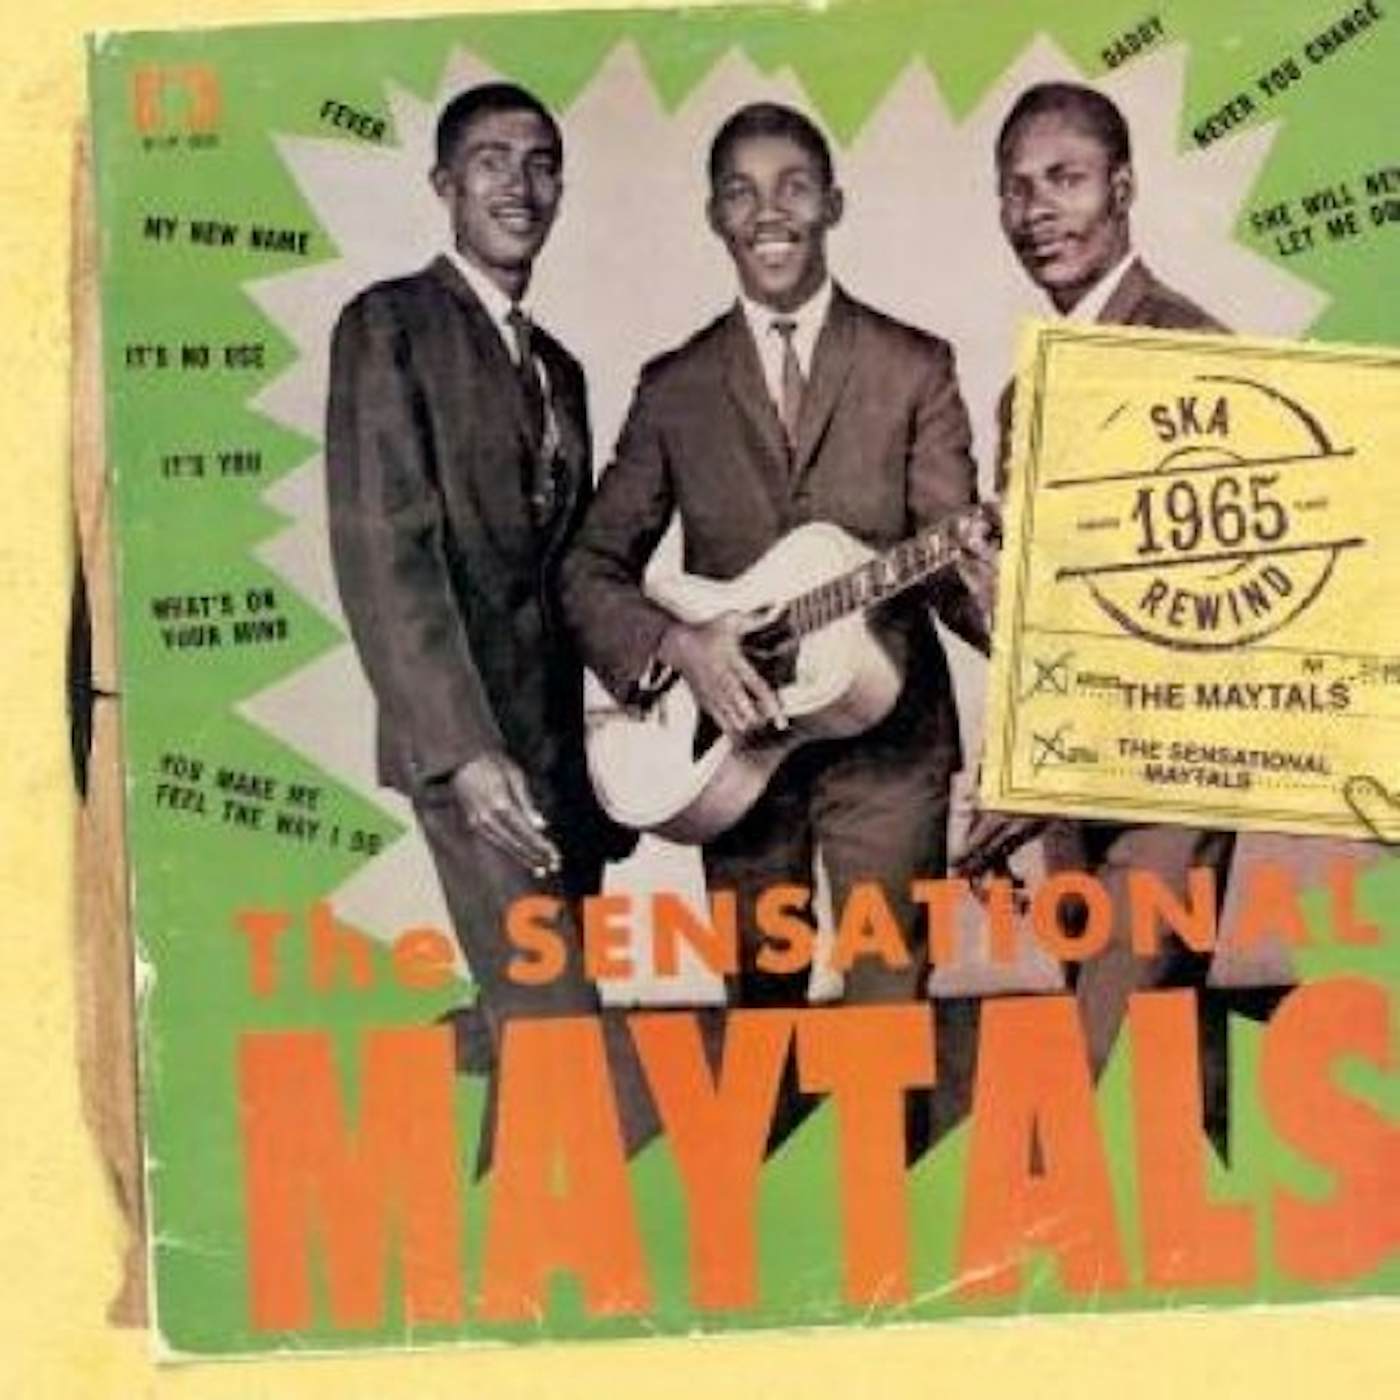 SENSATIONAL The Maytals CD